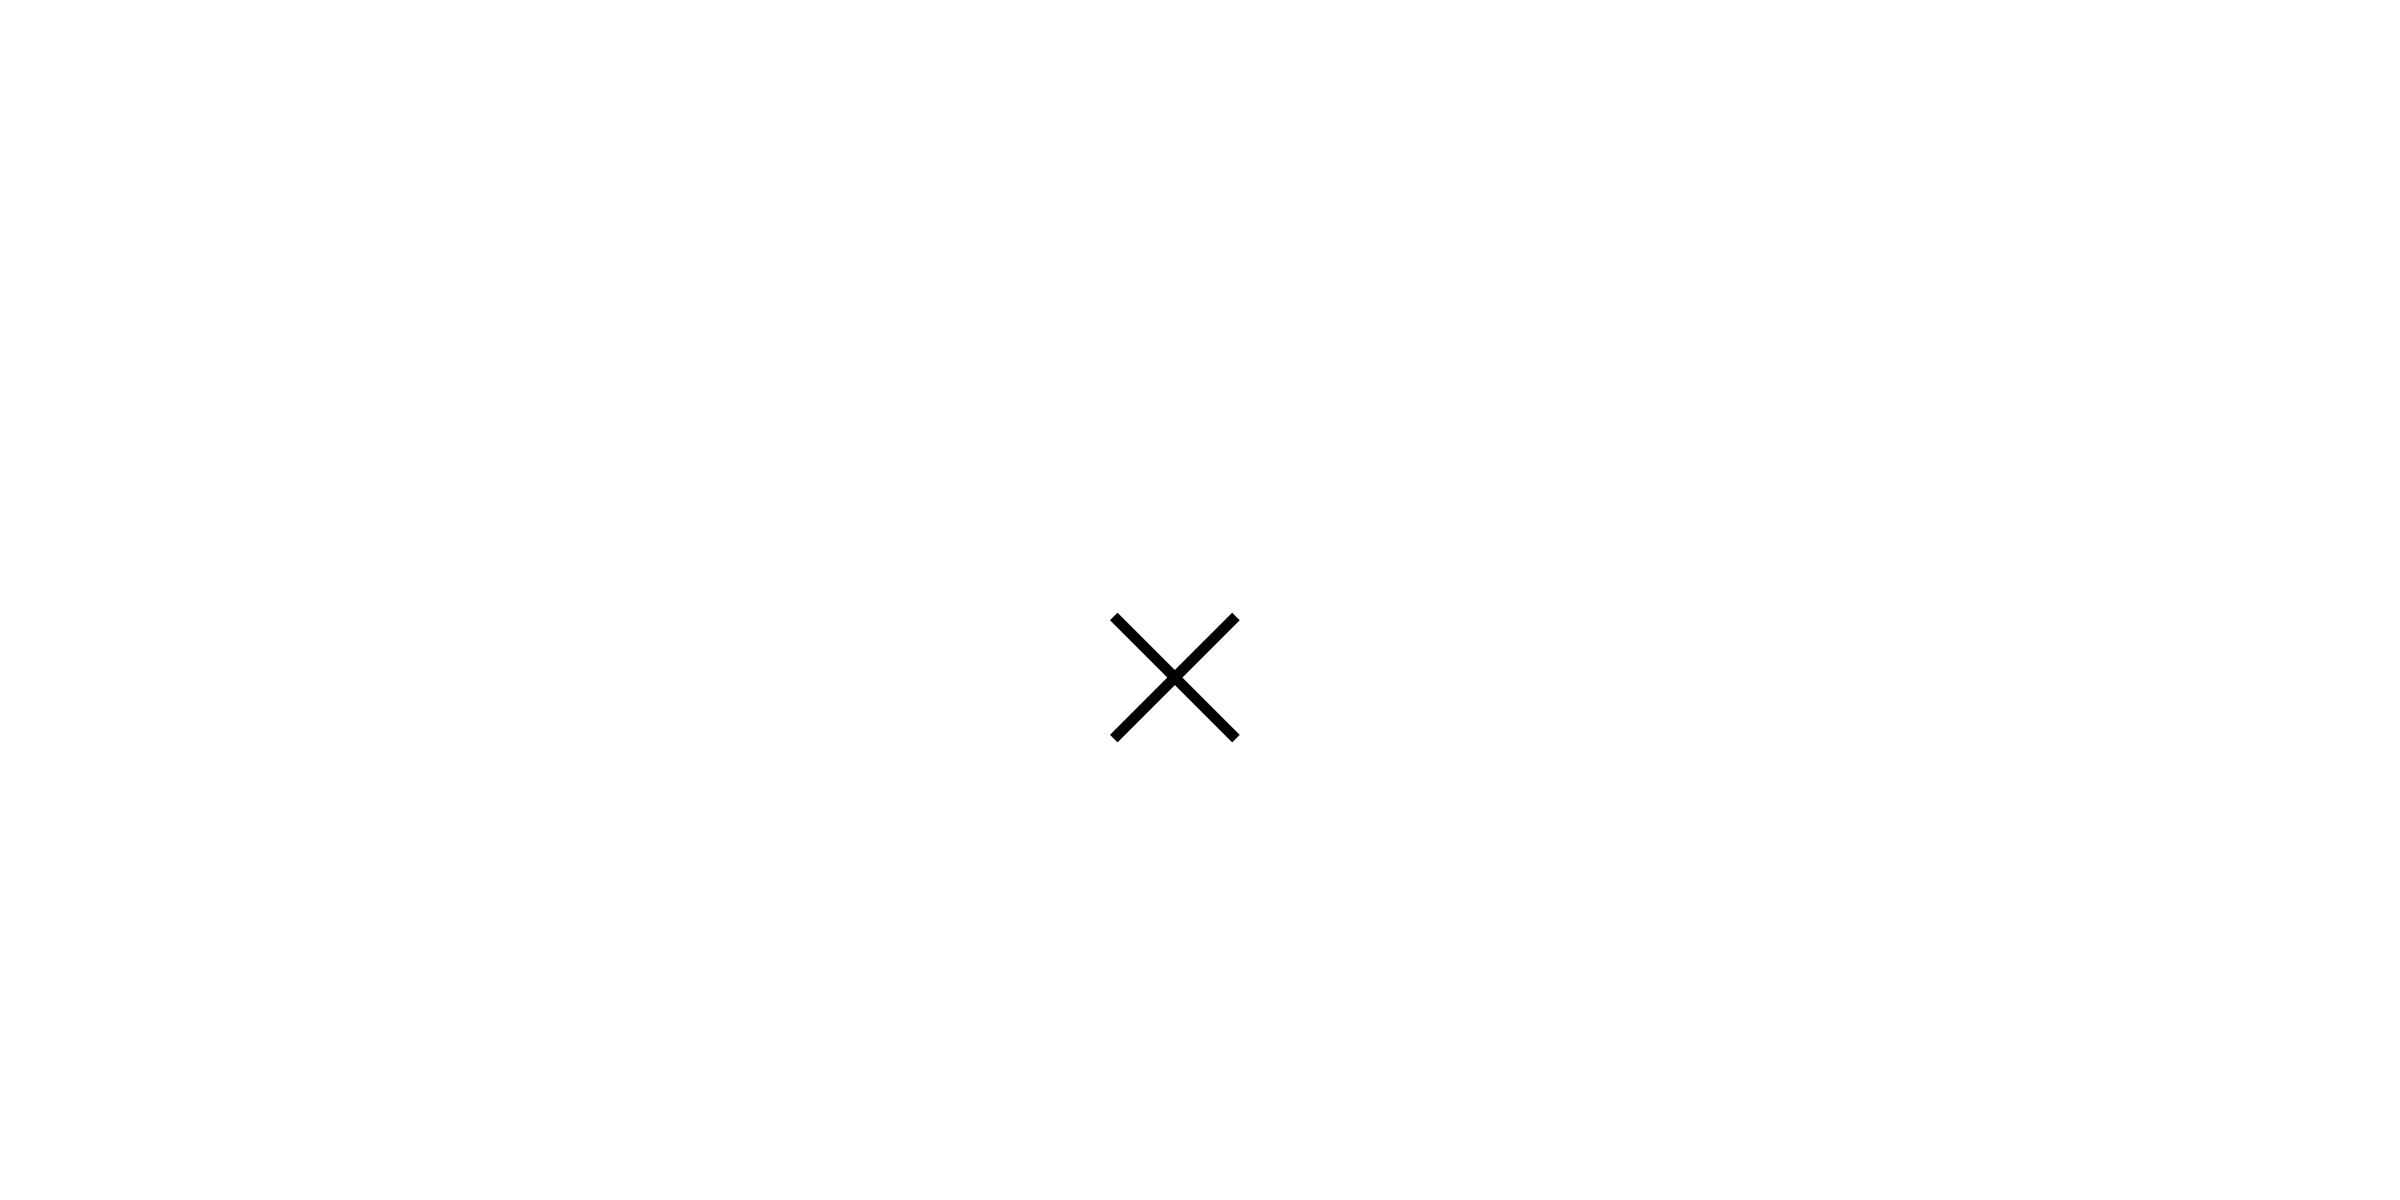 ORANGE RANGE LIVE TOUR 020